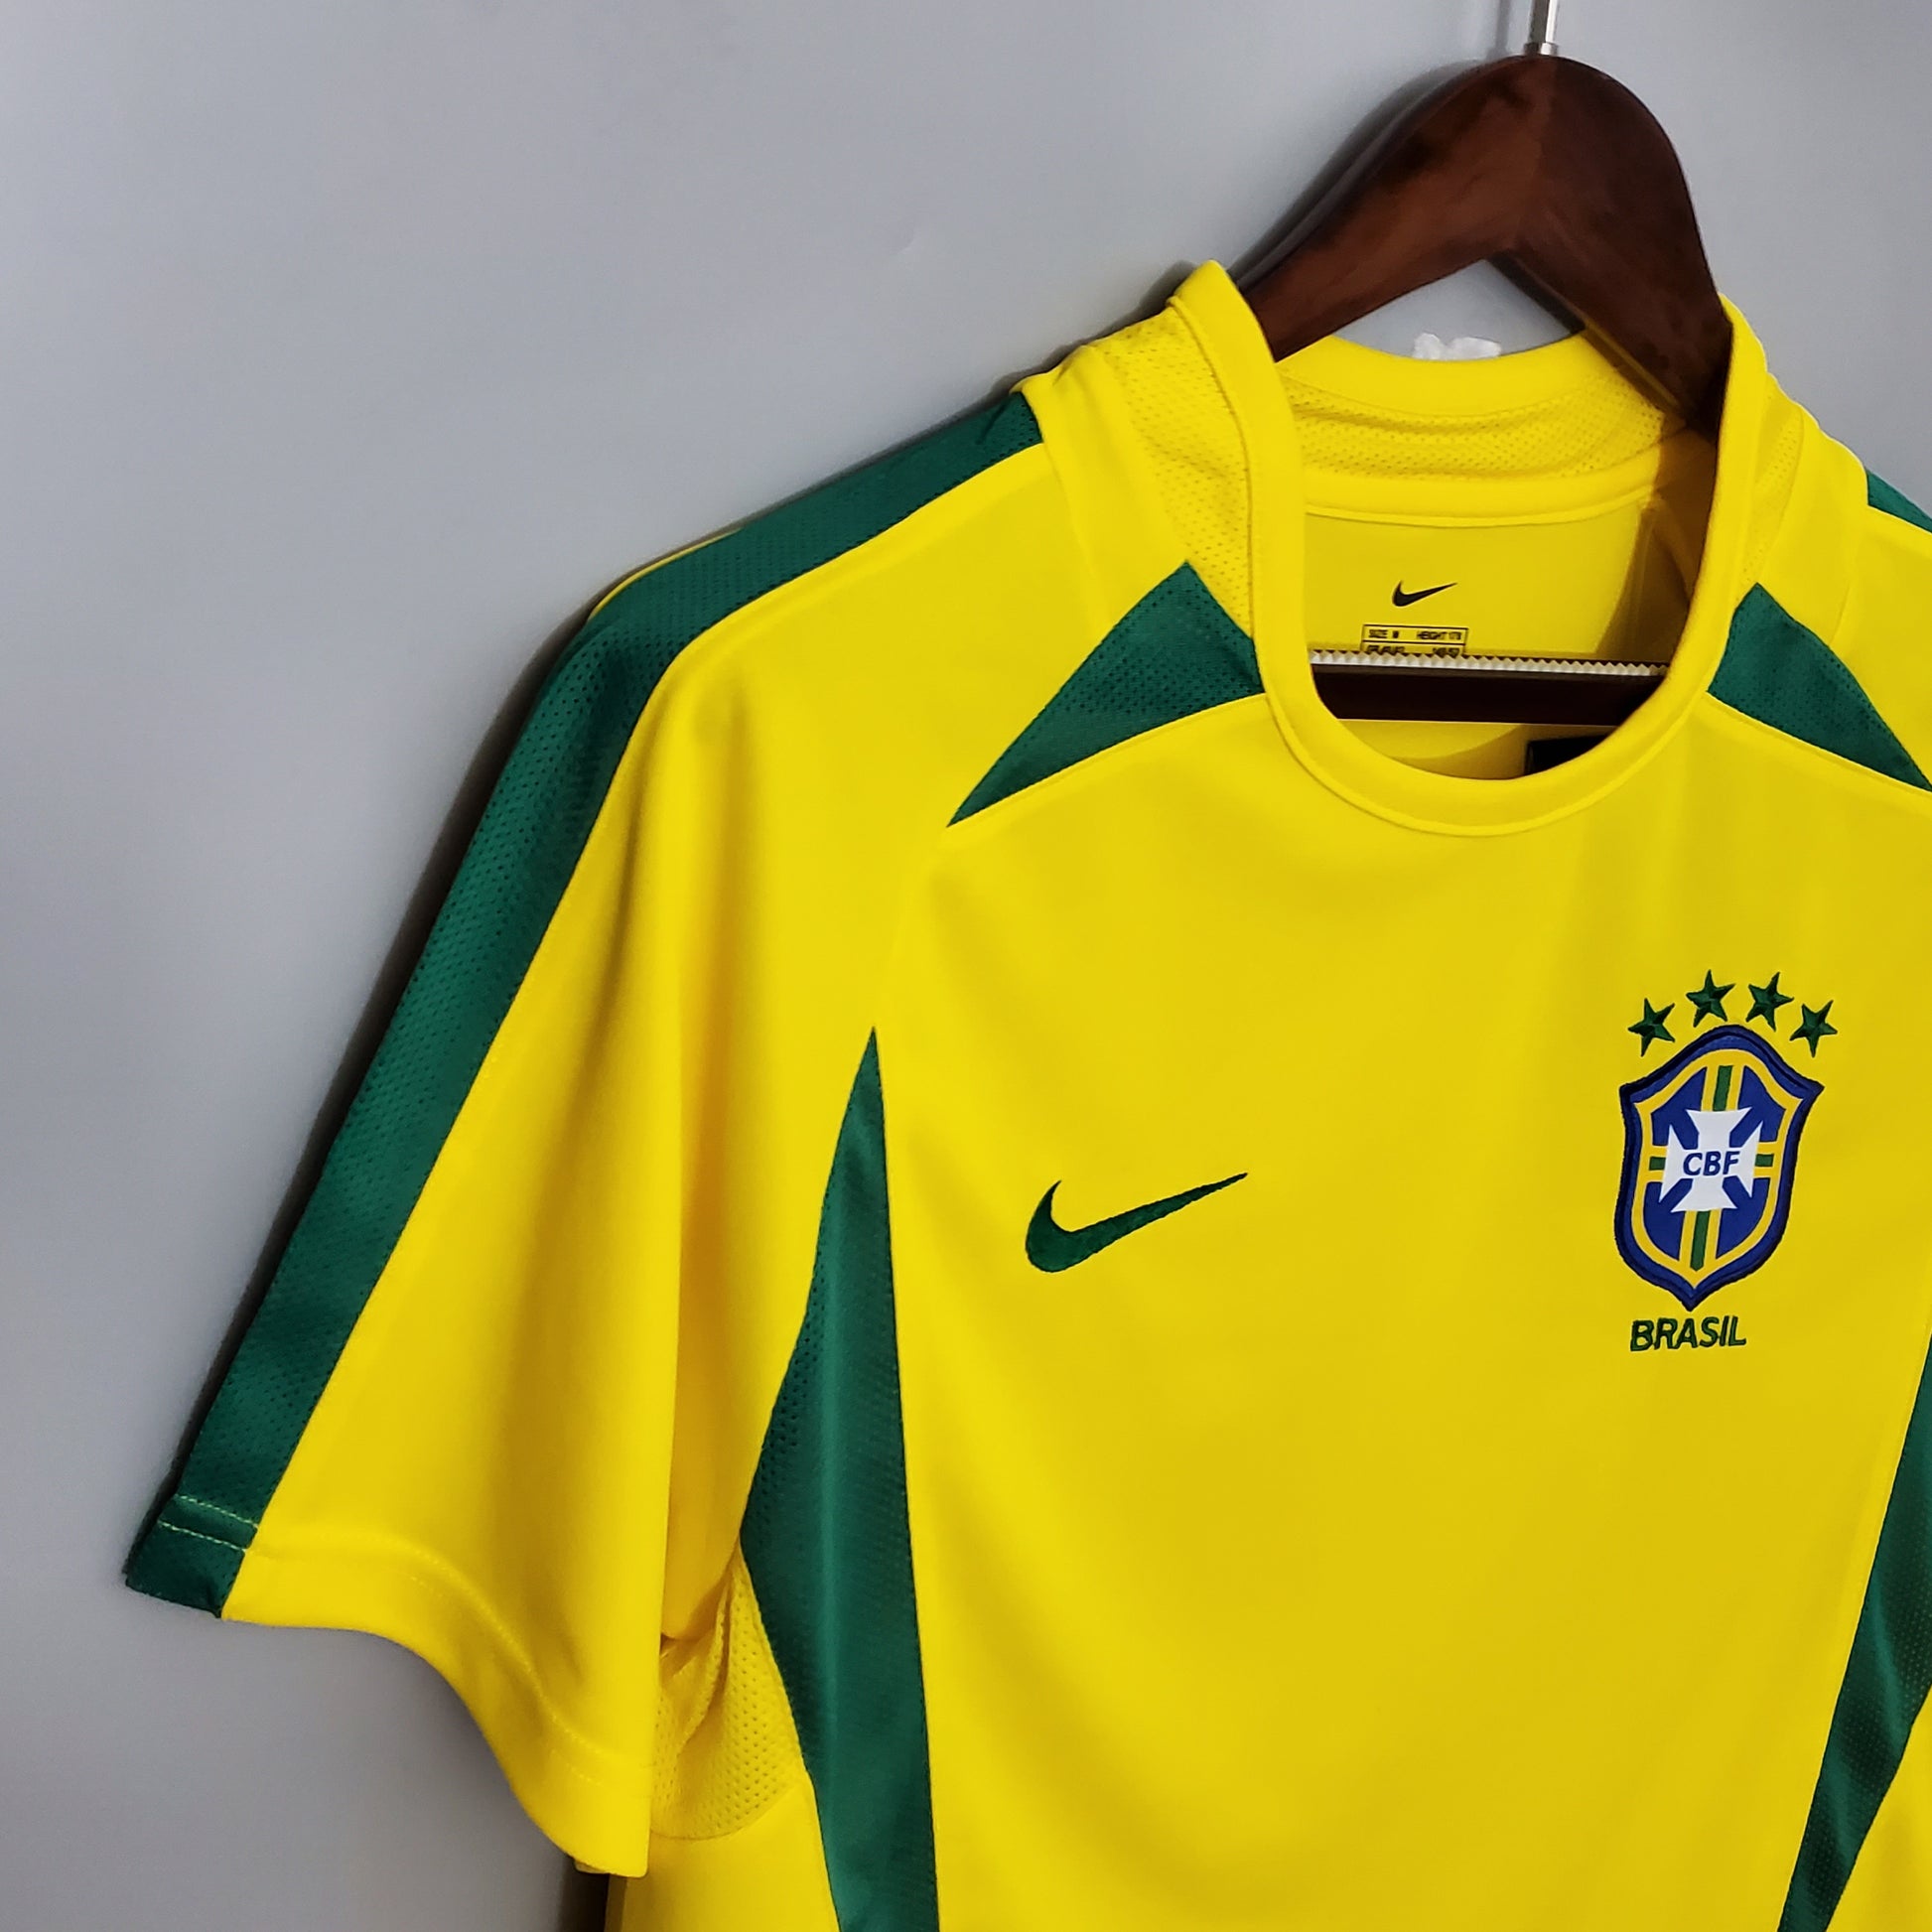 Brazil jersey, aus 81% Schlussverkauf 